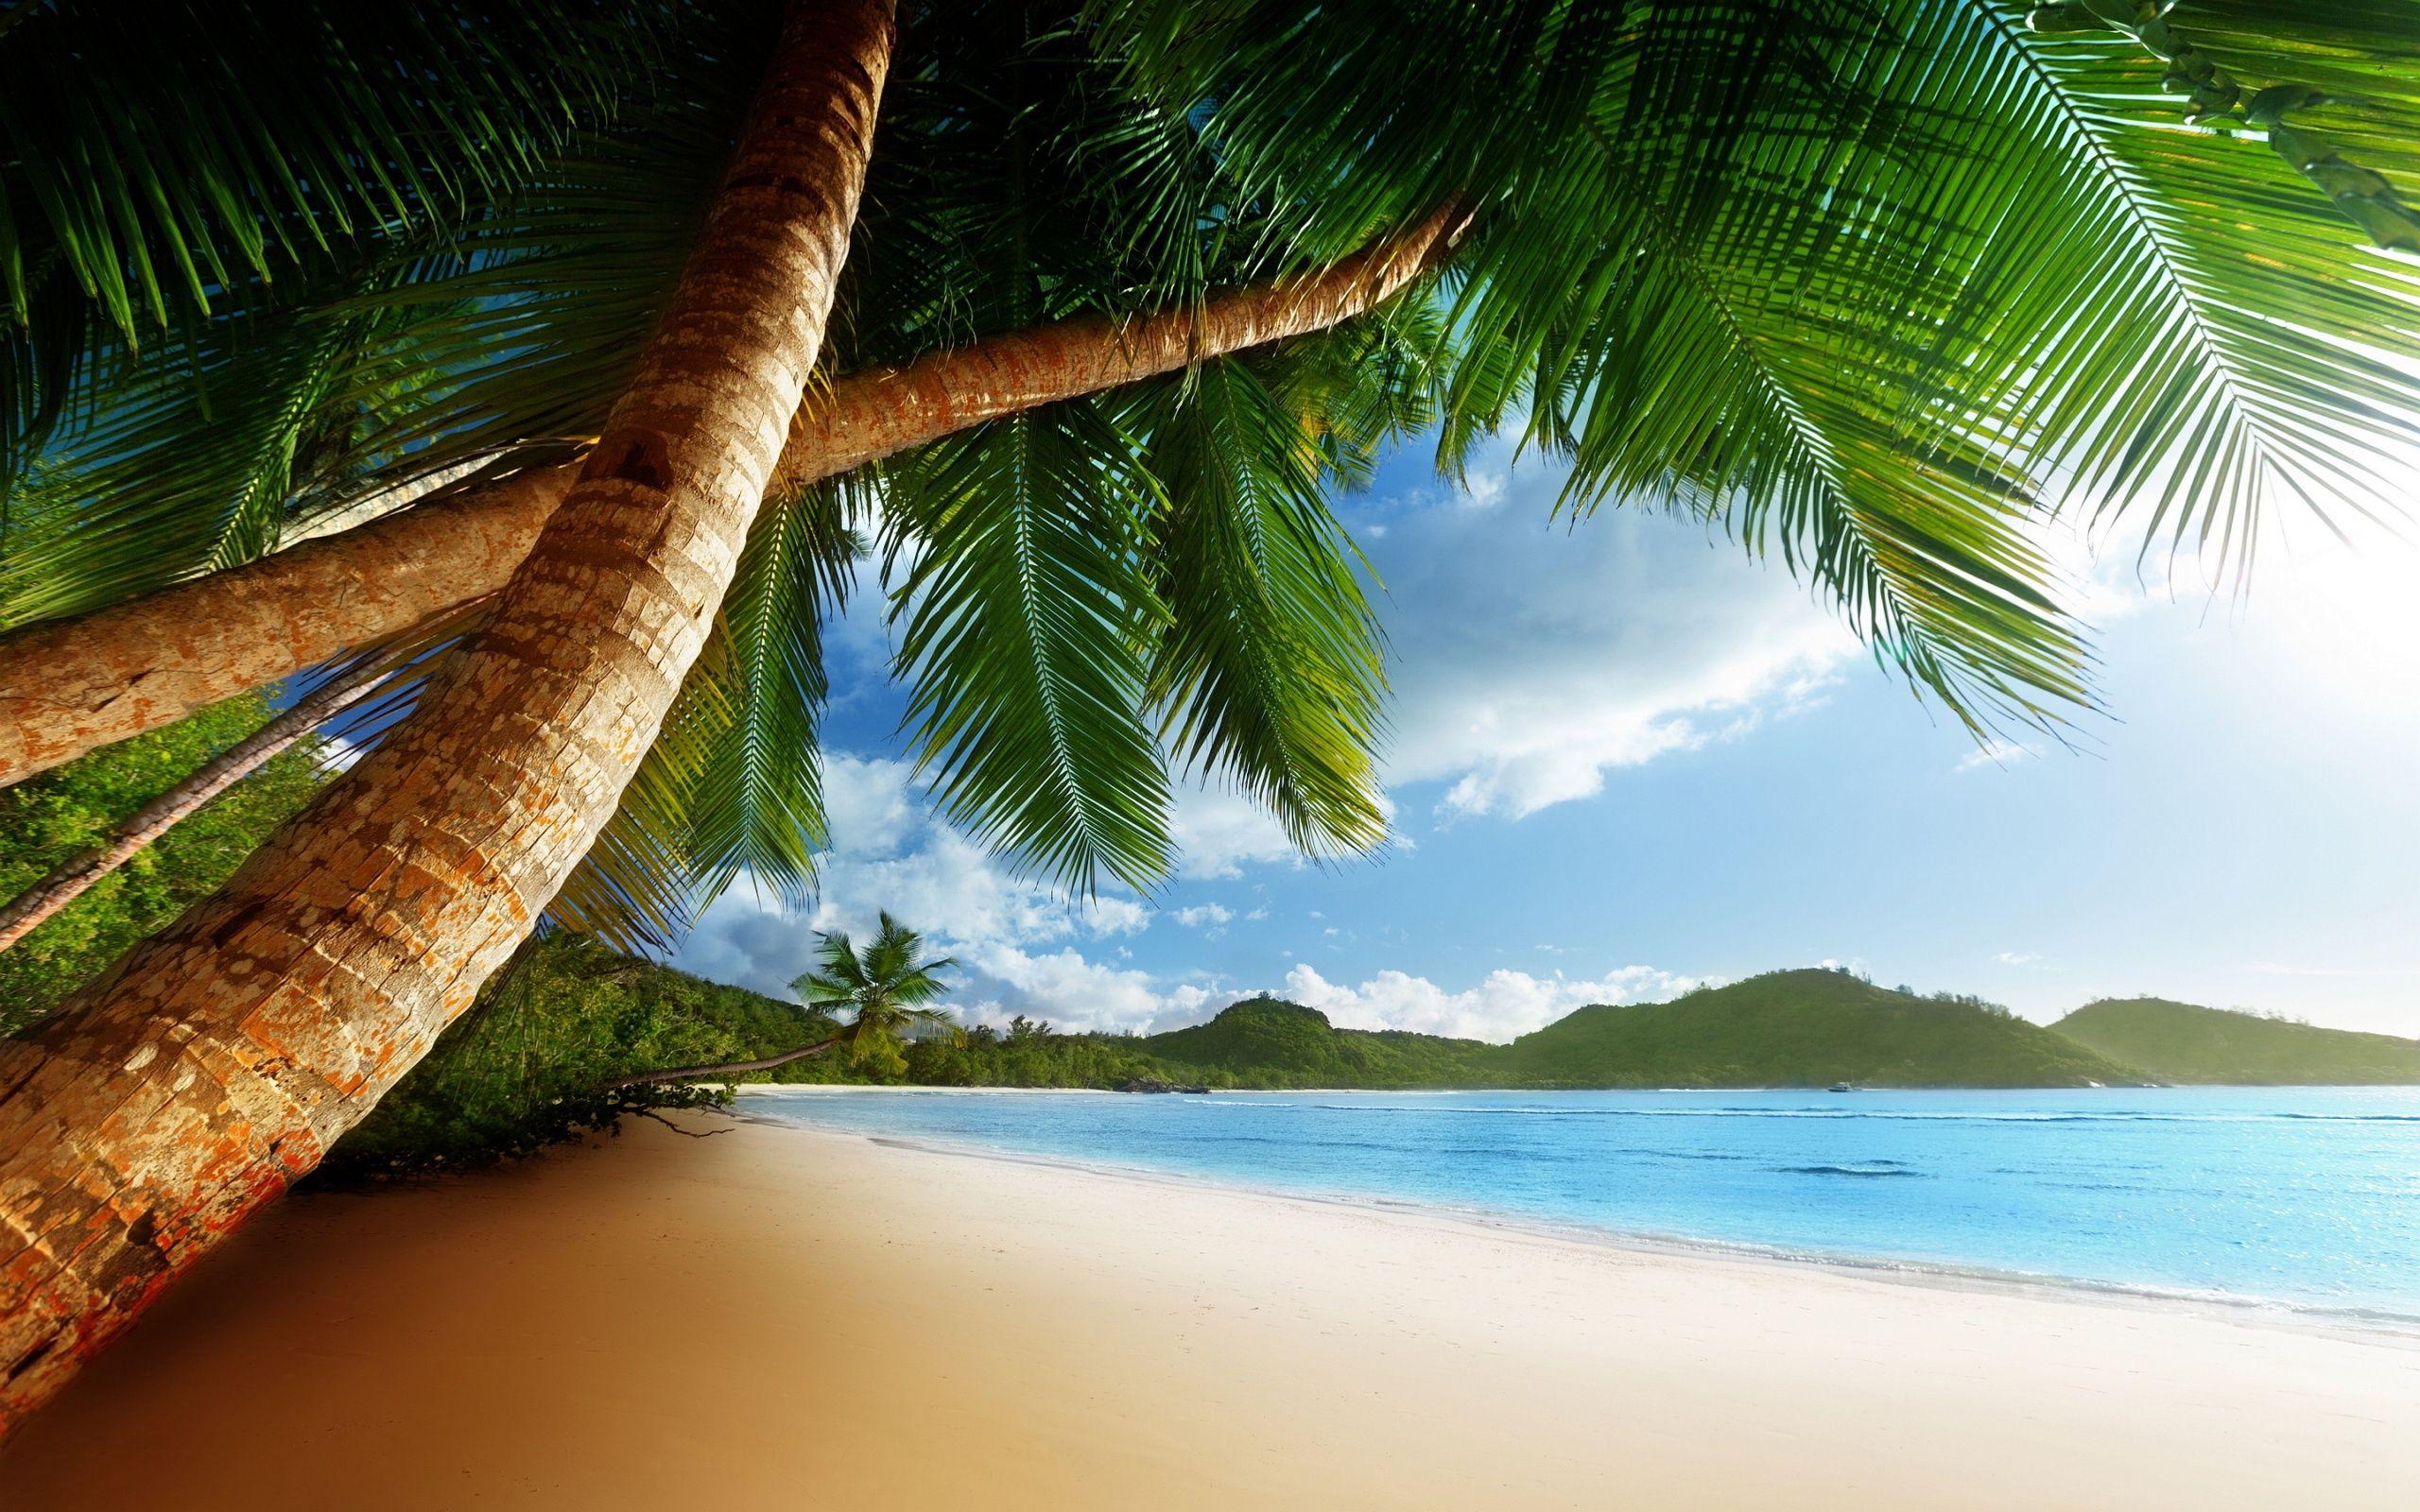 Caribbean Beach Wallpapers - Top Free Caribbean Beach Backgrounds ...